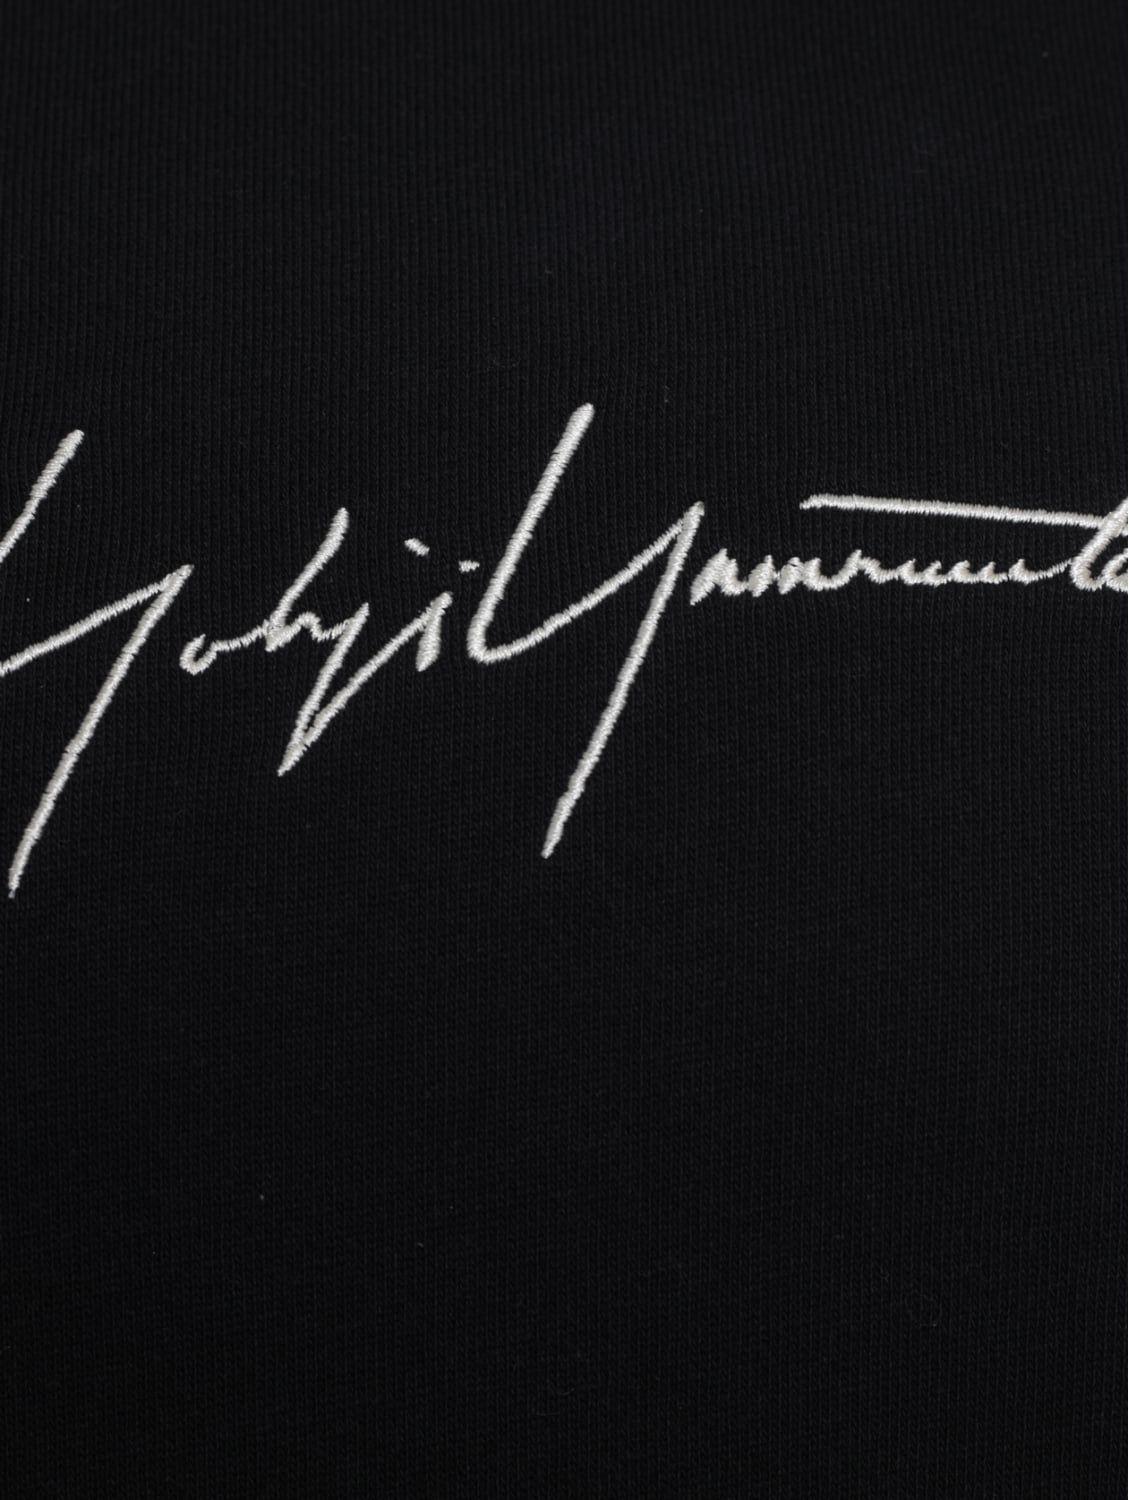 Yohji Yamamoto Logo - Yohji Yamamoto New Era Signature Logo Pullover Hoodie Black. Hervia